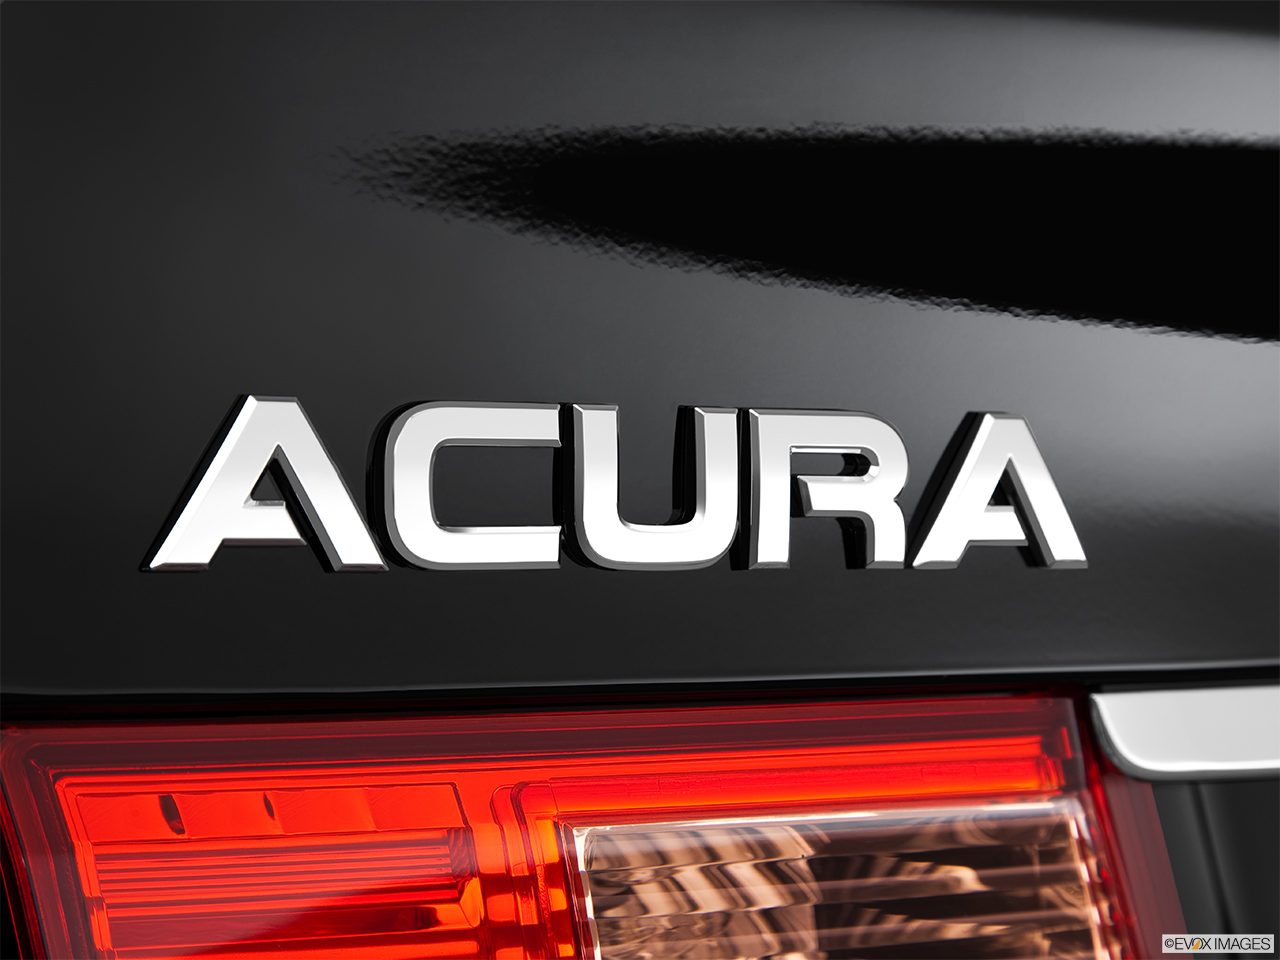 2014 Acura TSX 5-speed Automatic Exterior Bonus Shots (no set spec) 